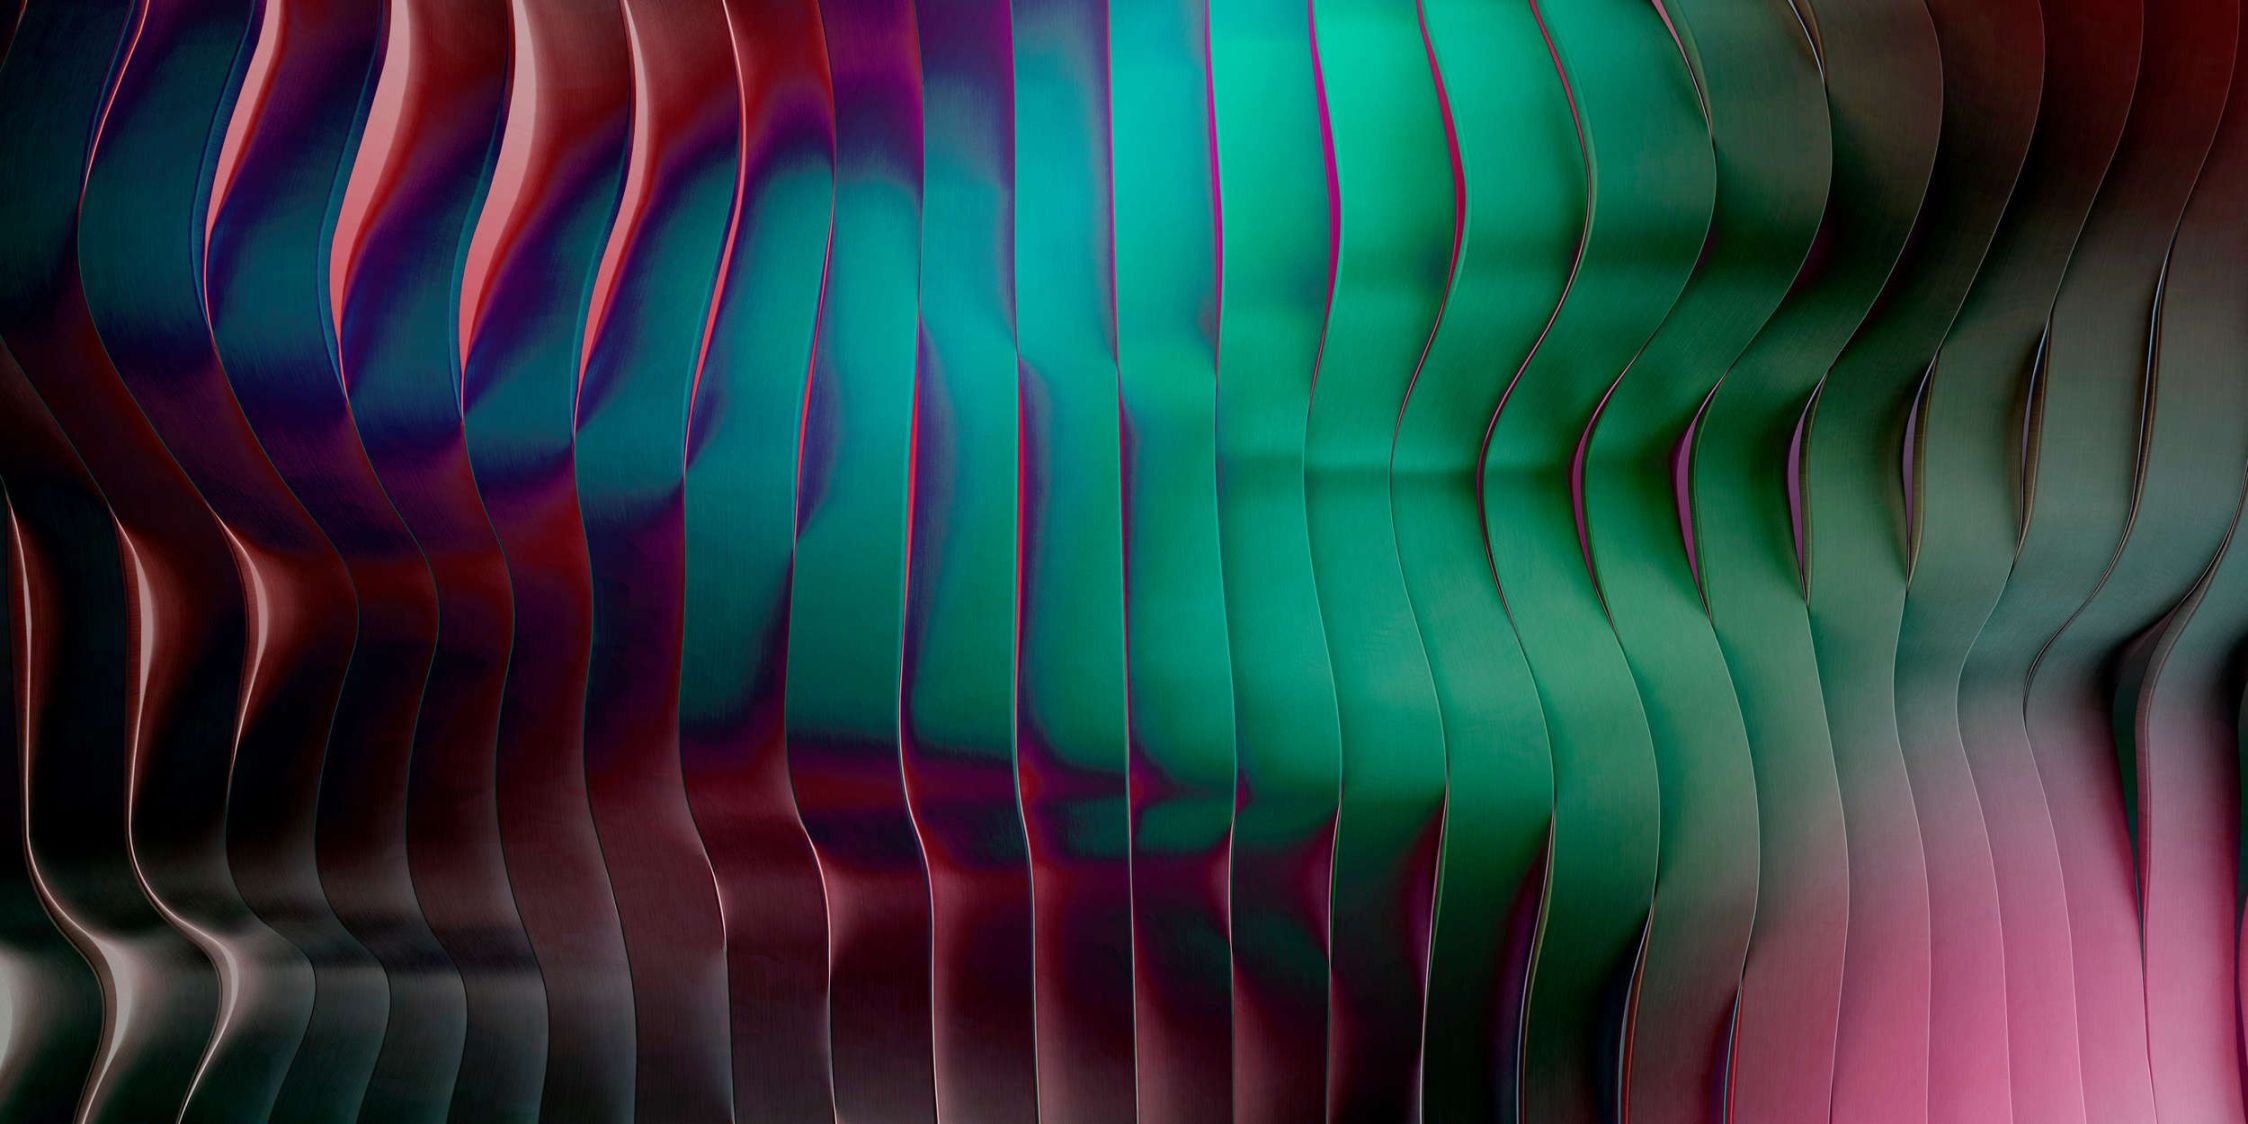             solaris 2 - Papel pintado fotográfico moderno con arquitectura ondulada - colores neón | tejido no tejido de textura ligera
        